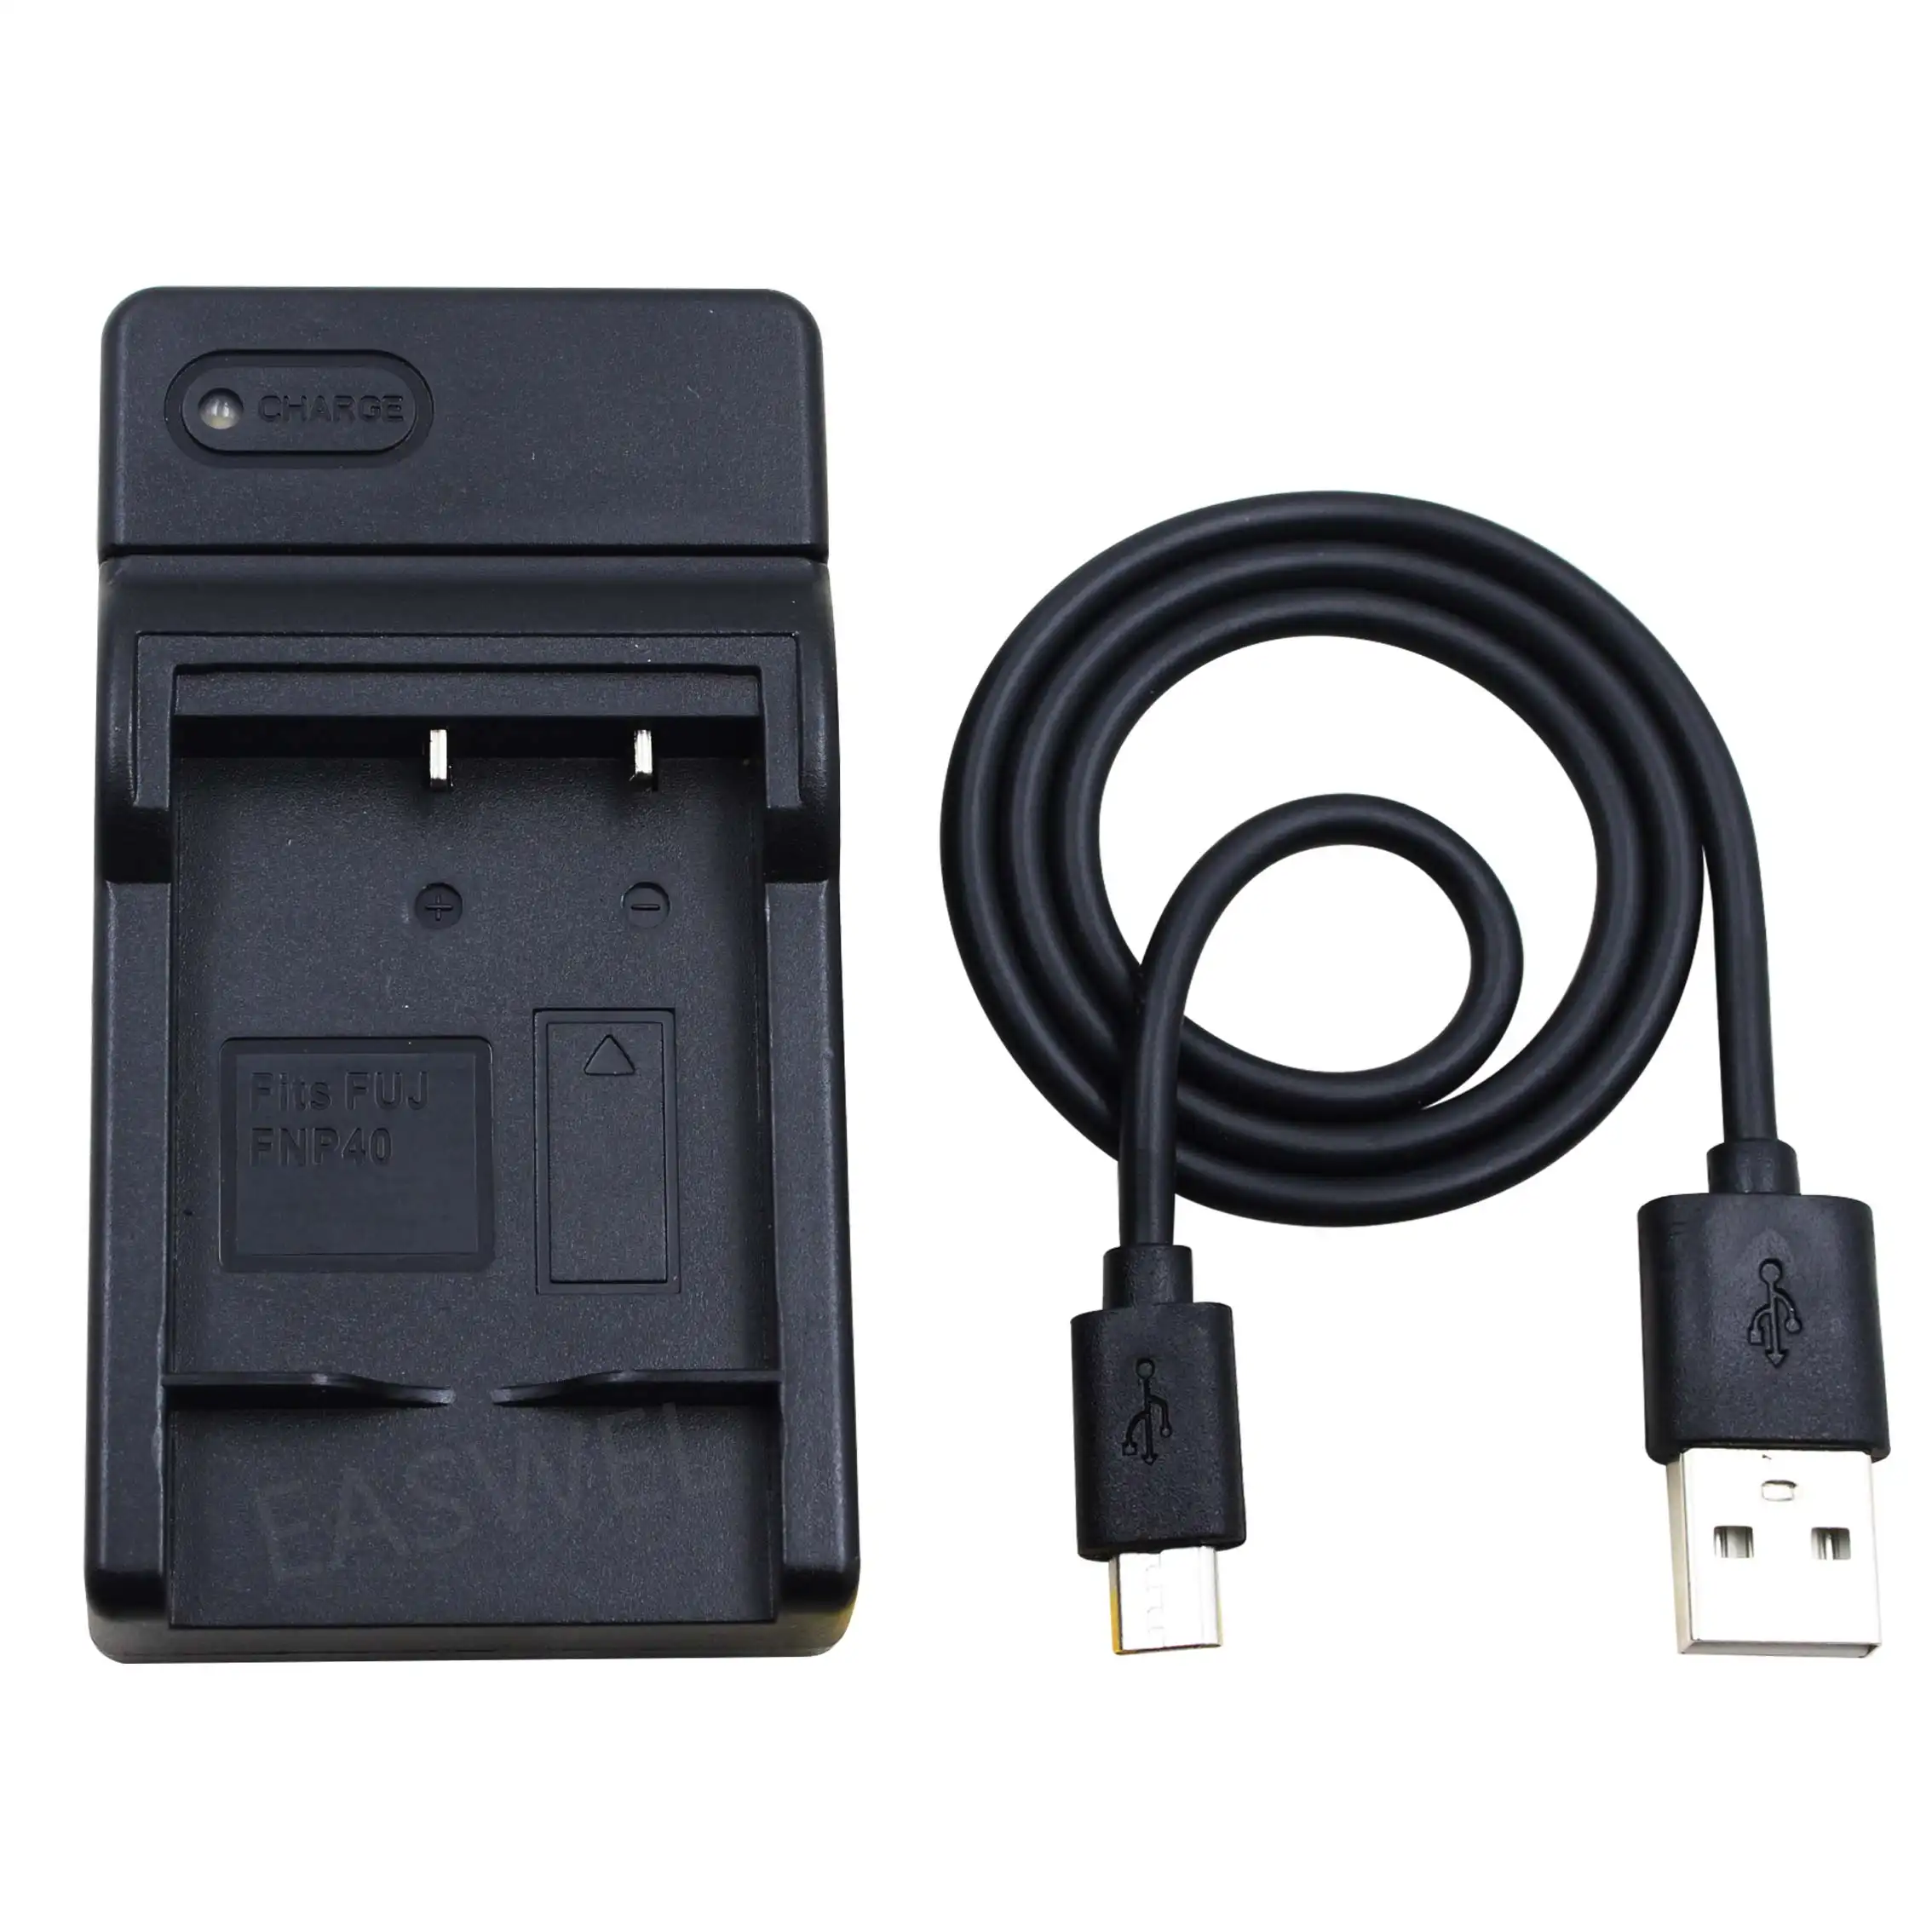 New USB kỹ thuật số Battery Charger đối với LP-E5 LPE5 LP E5 D-LI8 D-LI95 D-Li85 DLI-102 vps007l11c Pin